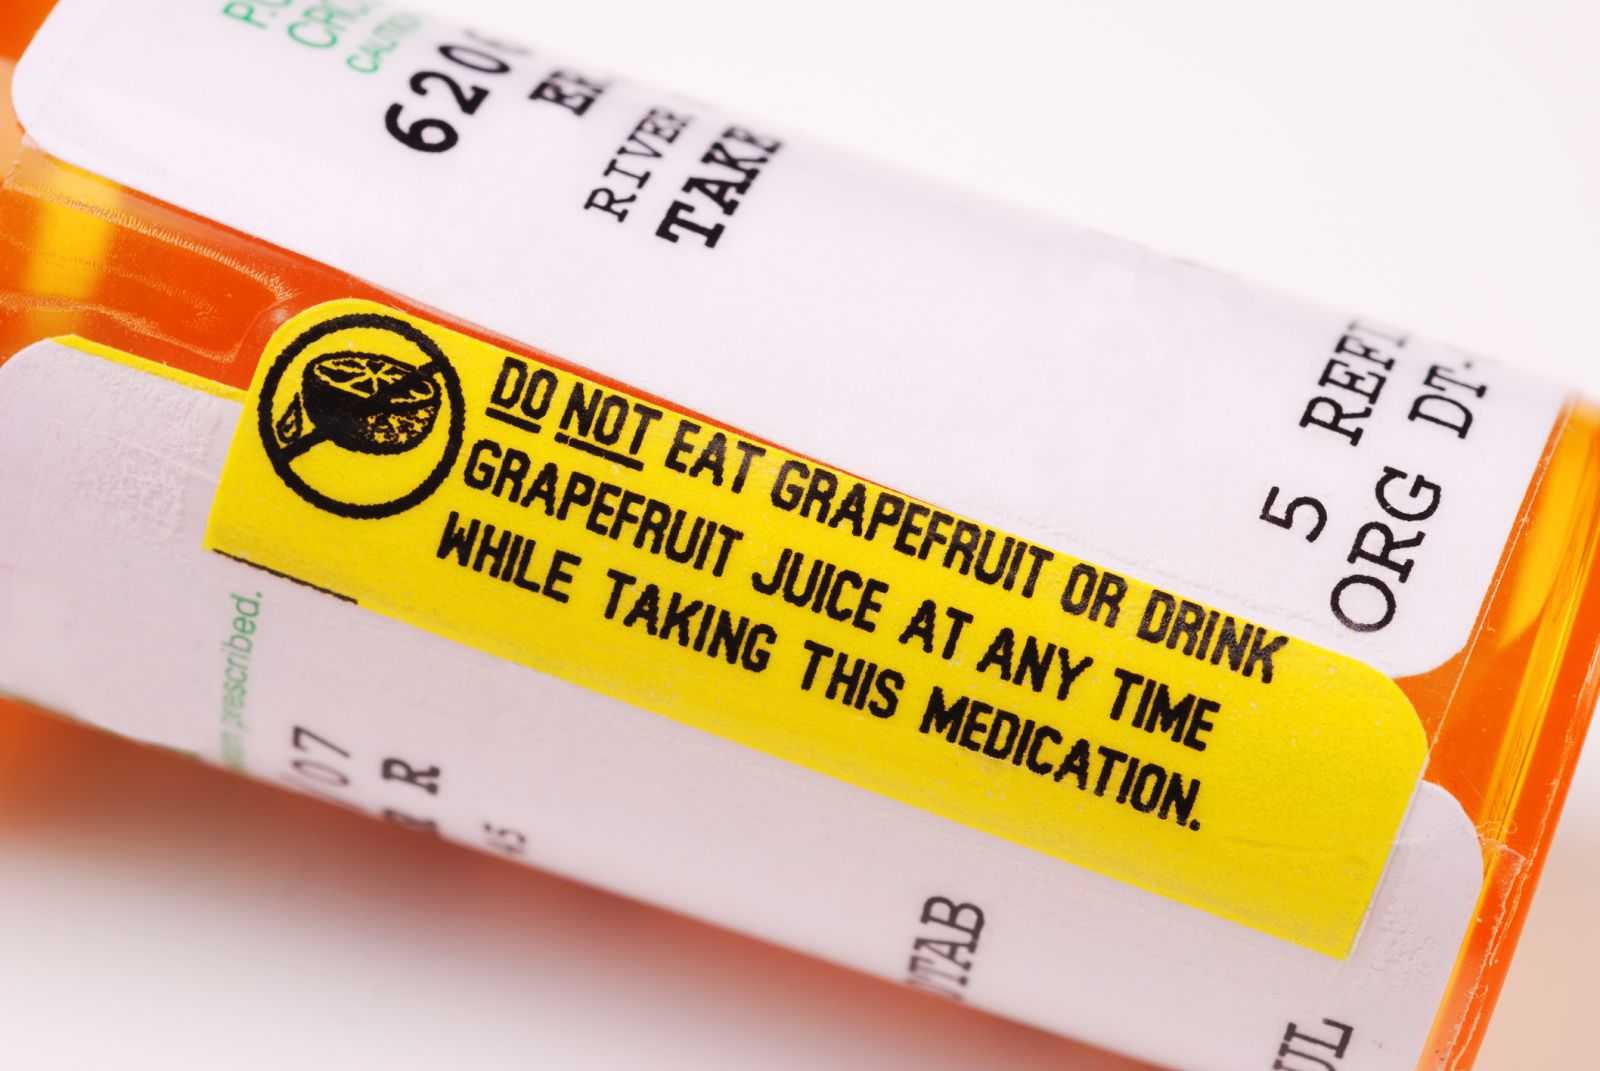 How To Potentiate Valium With Grapefruit Juice